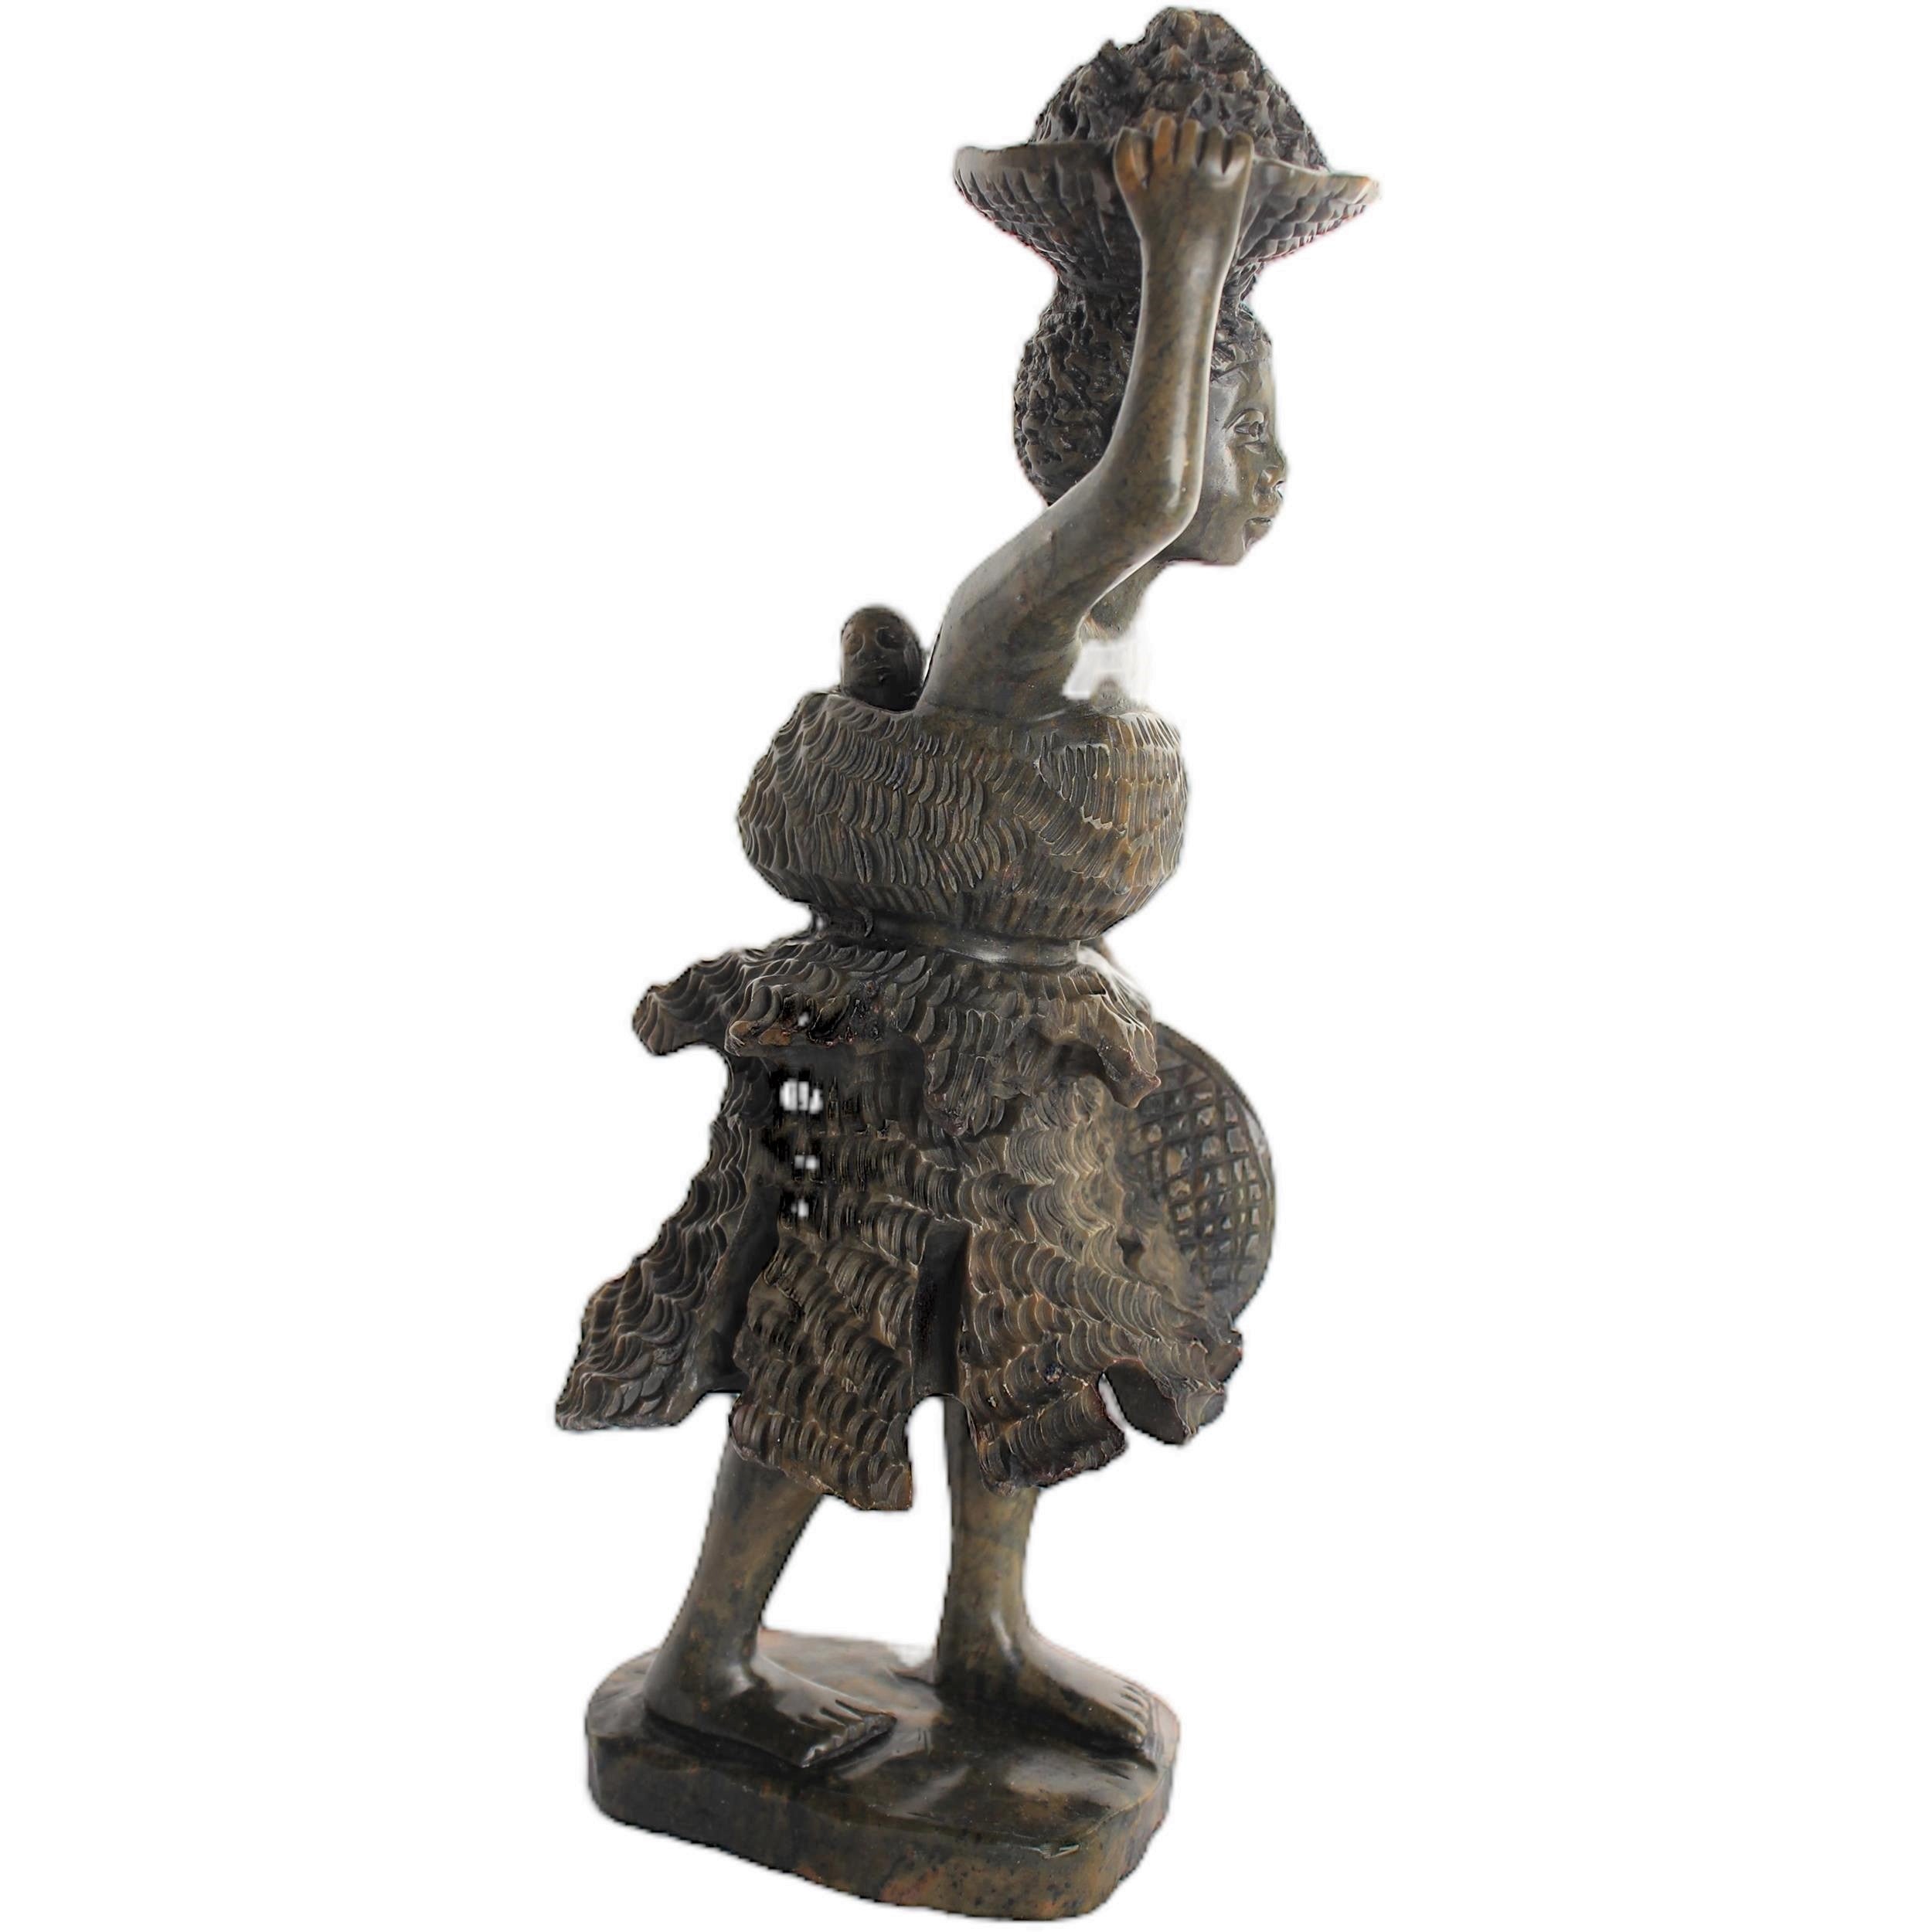 Shona Tribe Serpentine Stone Warrior Figure ~10.6" Tall - Warrior Figure